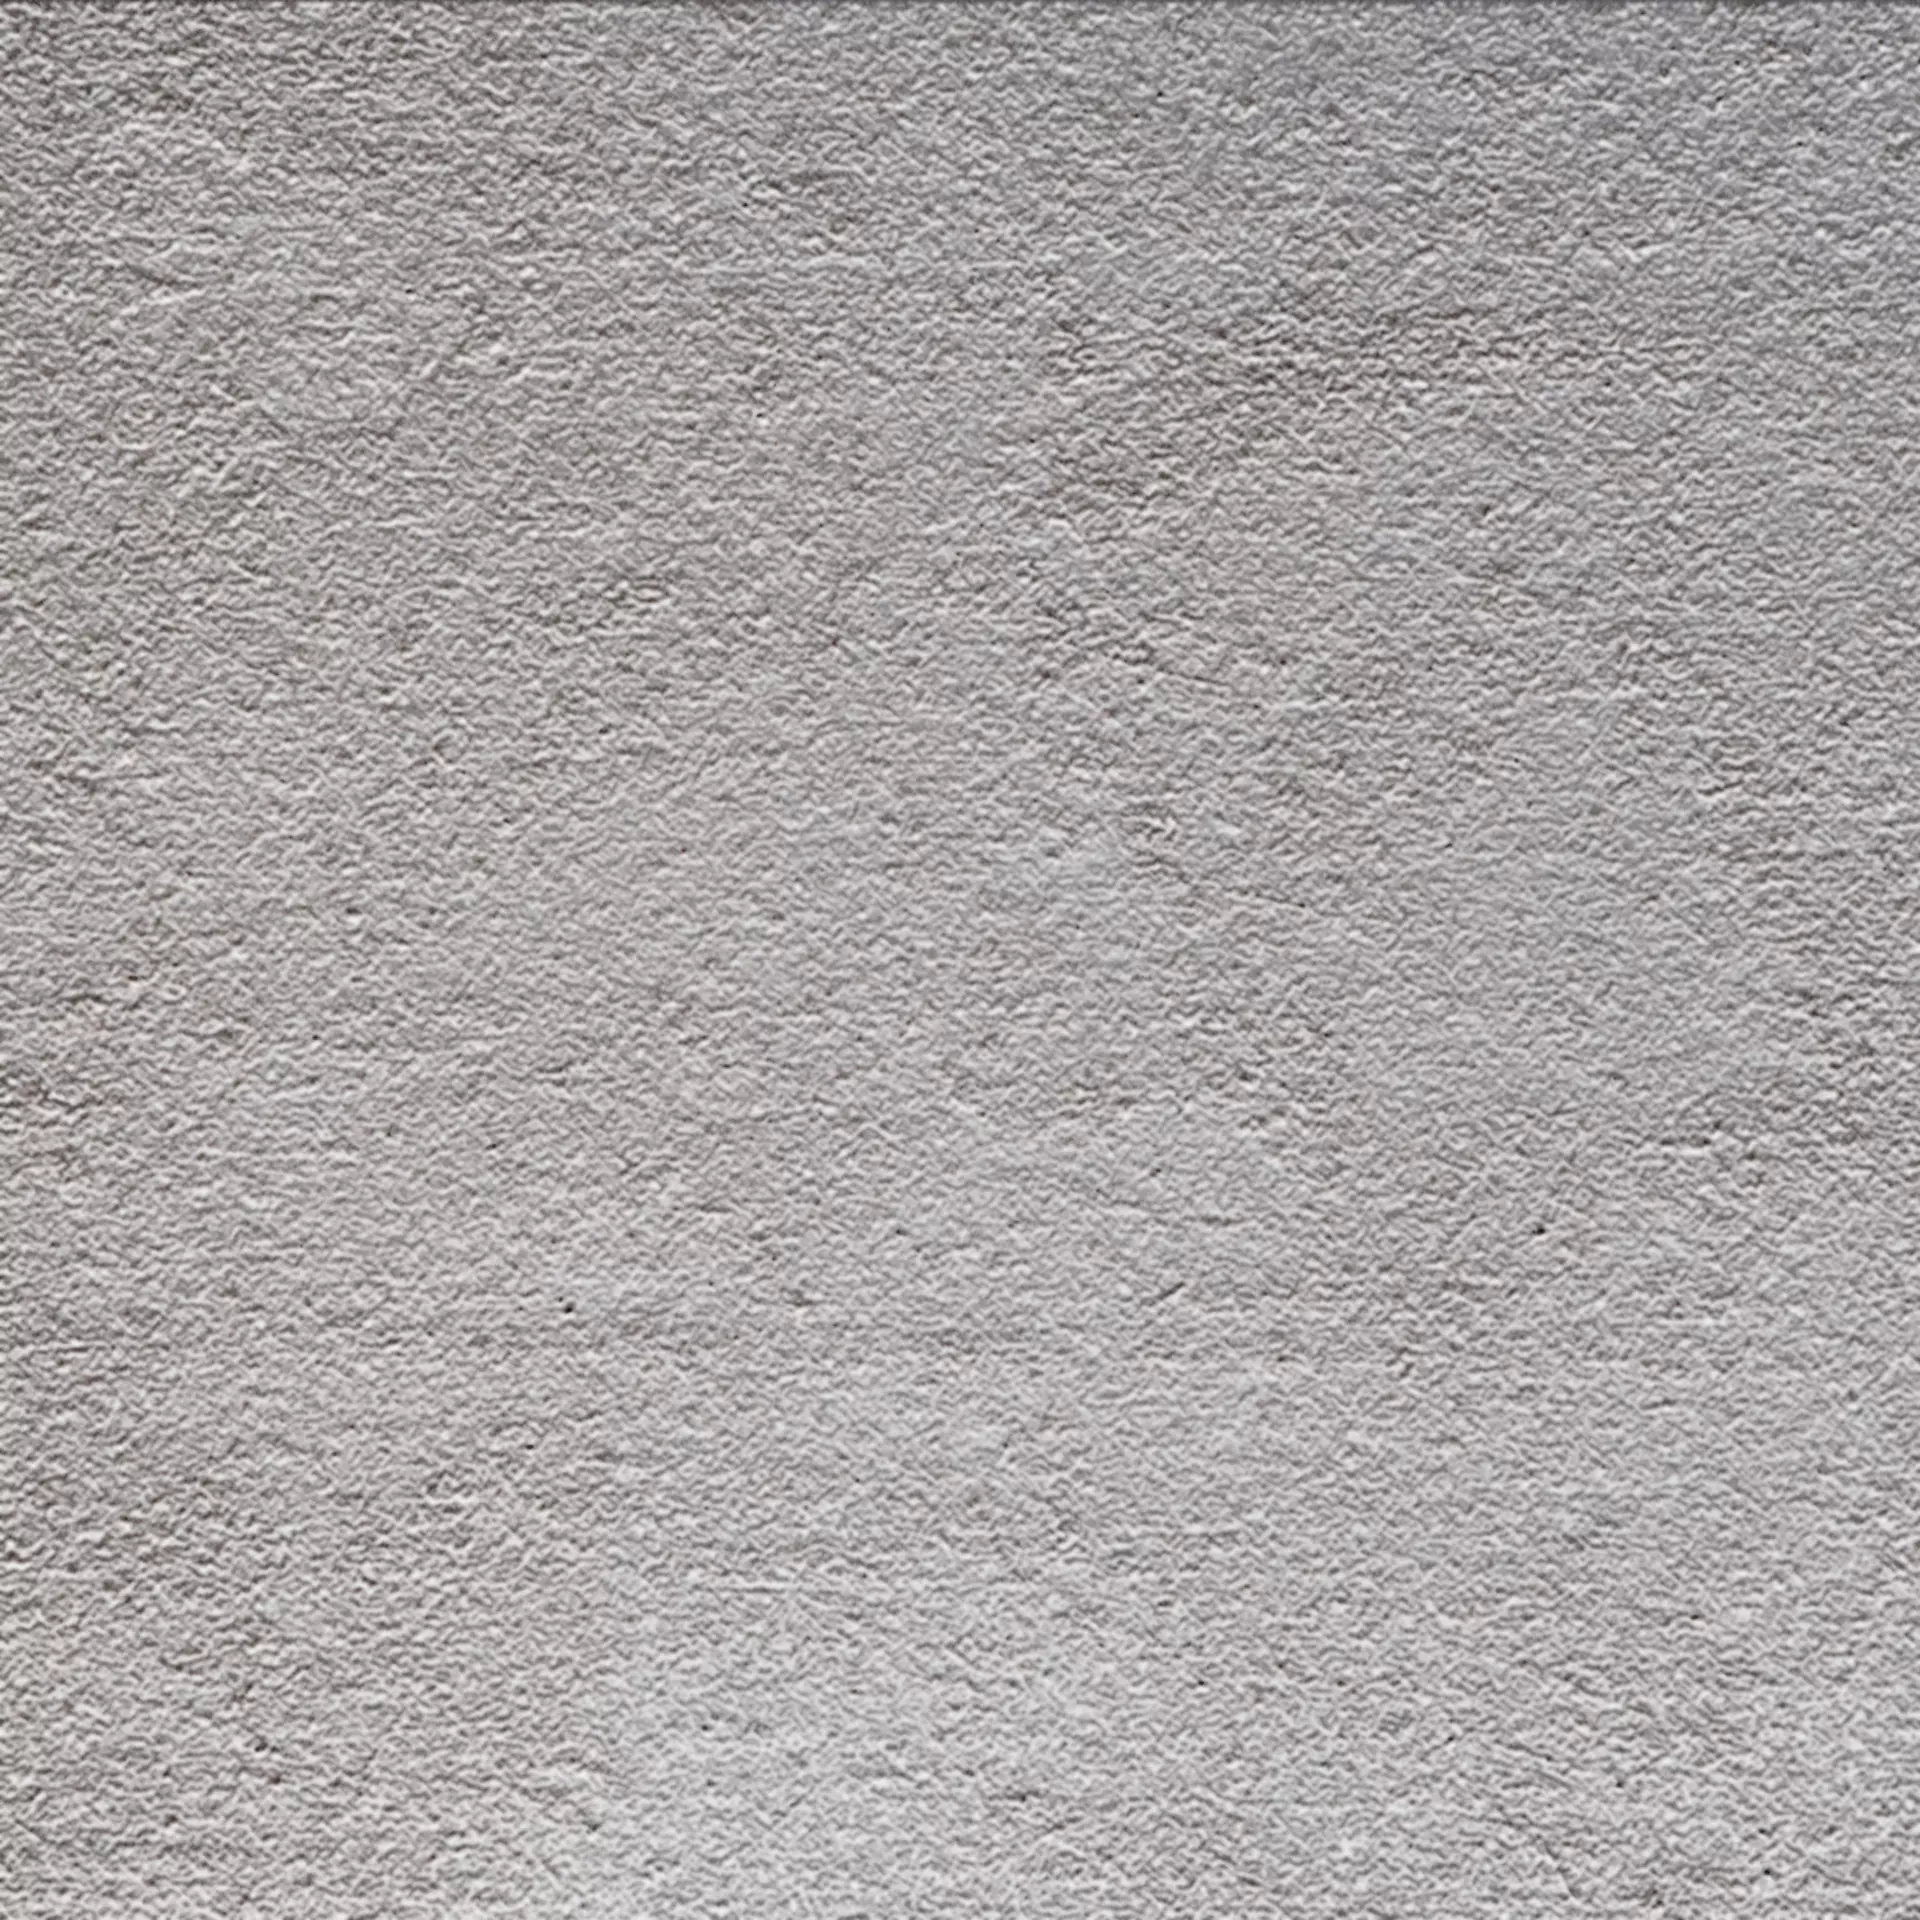 La Faenza Cottofaenza White Natural Bush-Hammered Rustic Matt Outdoor Floor 155537 60x60cm rectified 10mm - COTTOF. RB60W